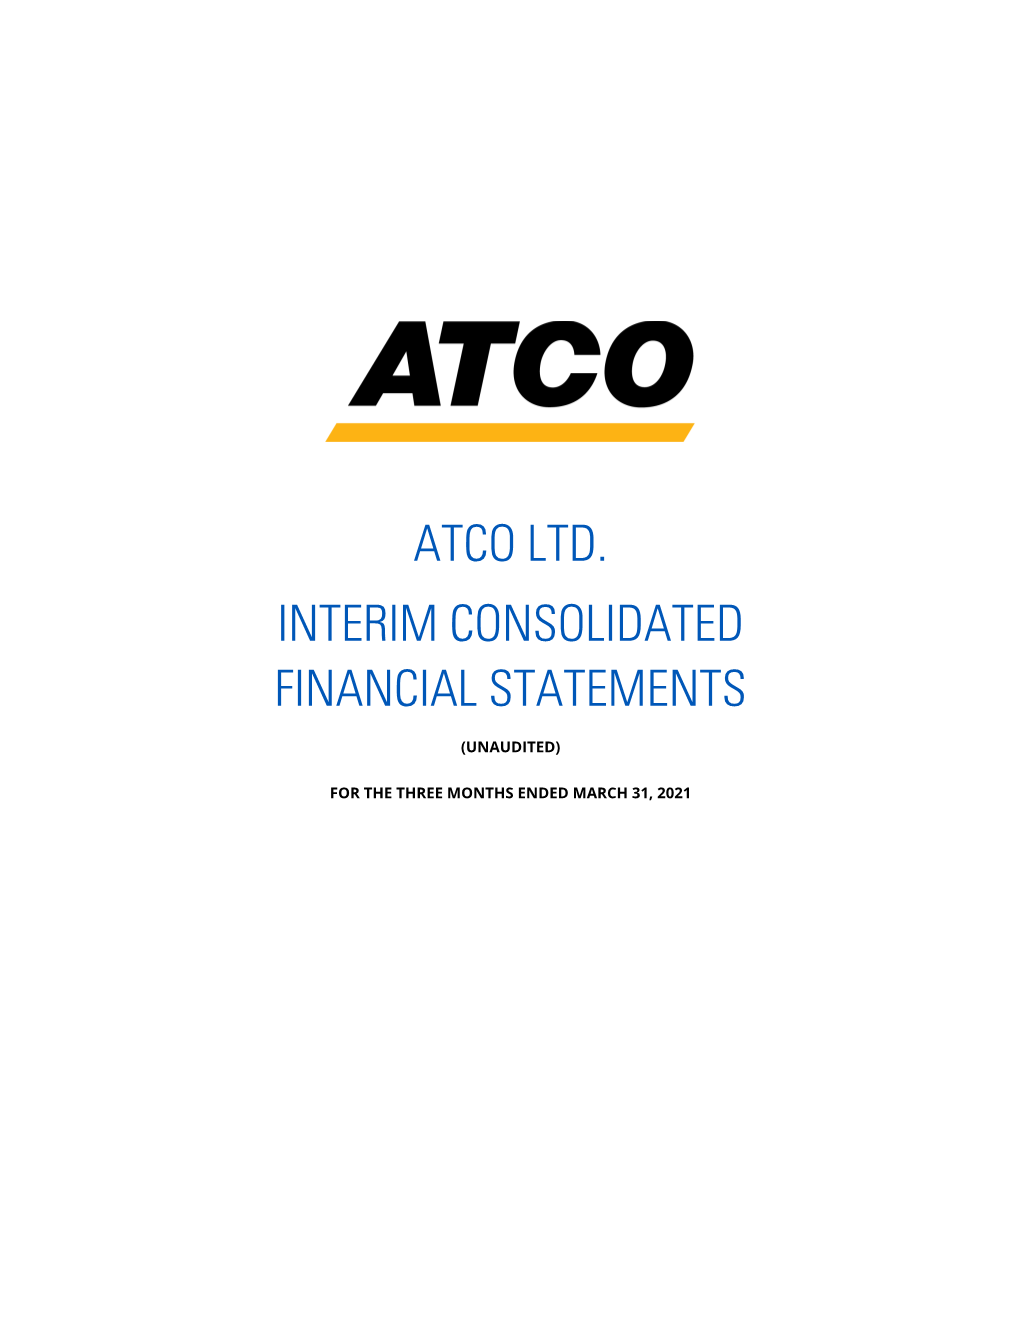 Atco Ltd. Interim Consolidated Financial Statements